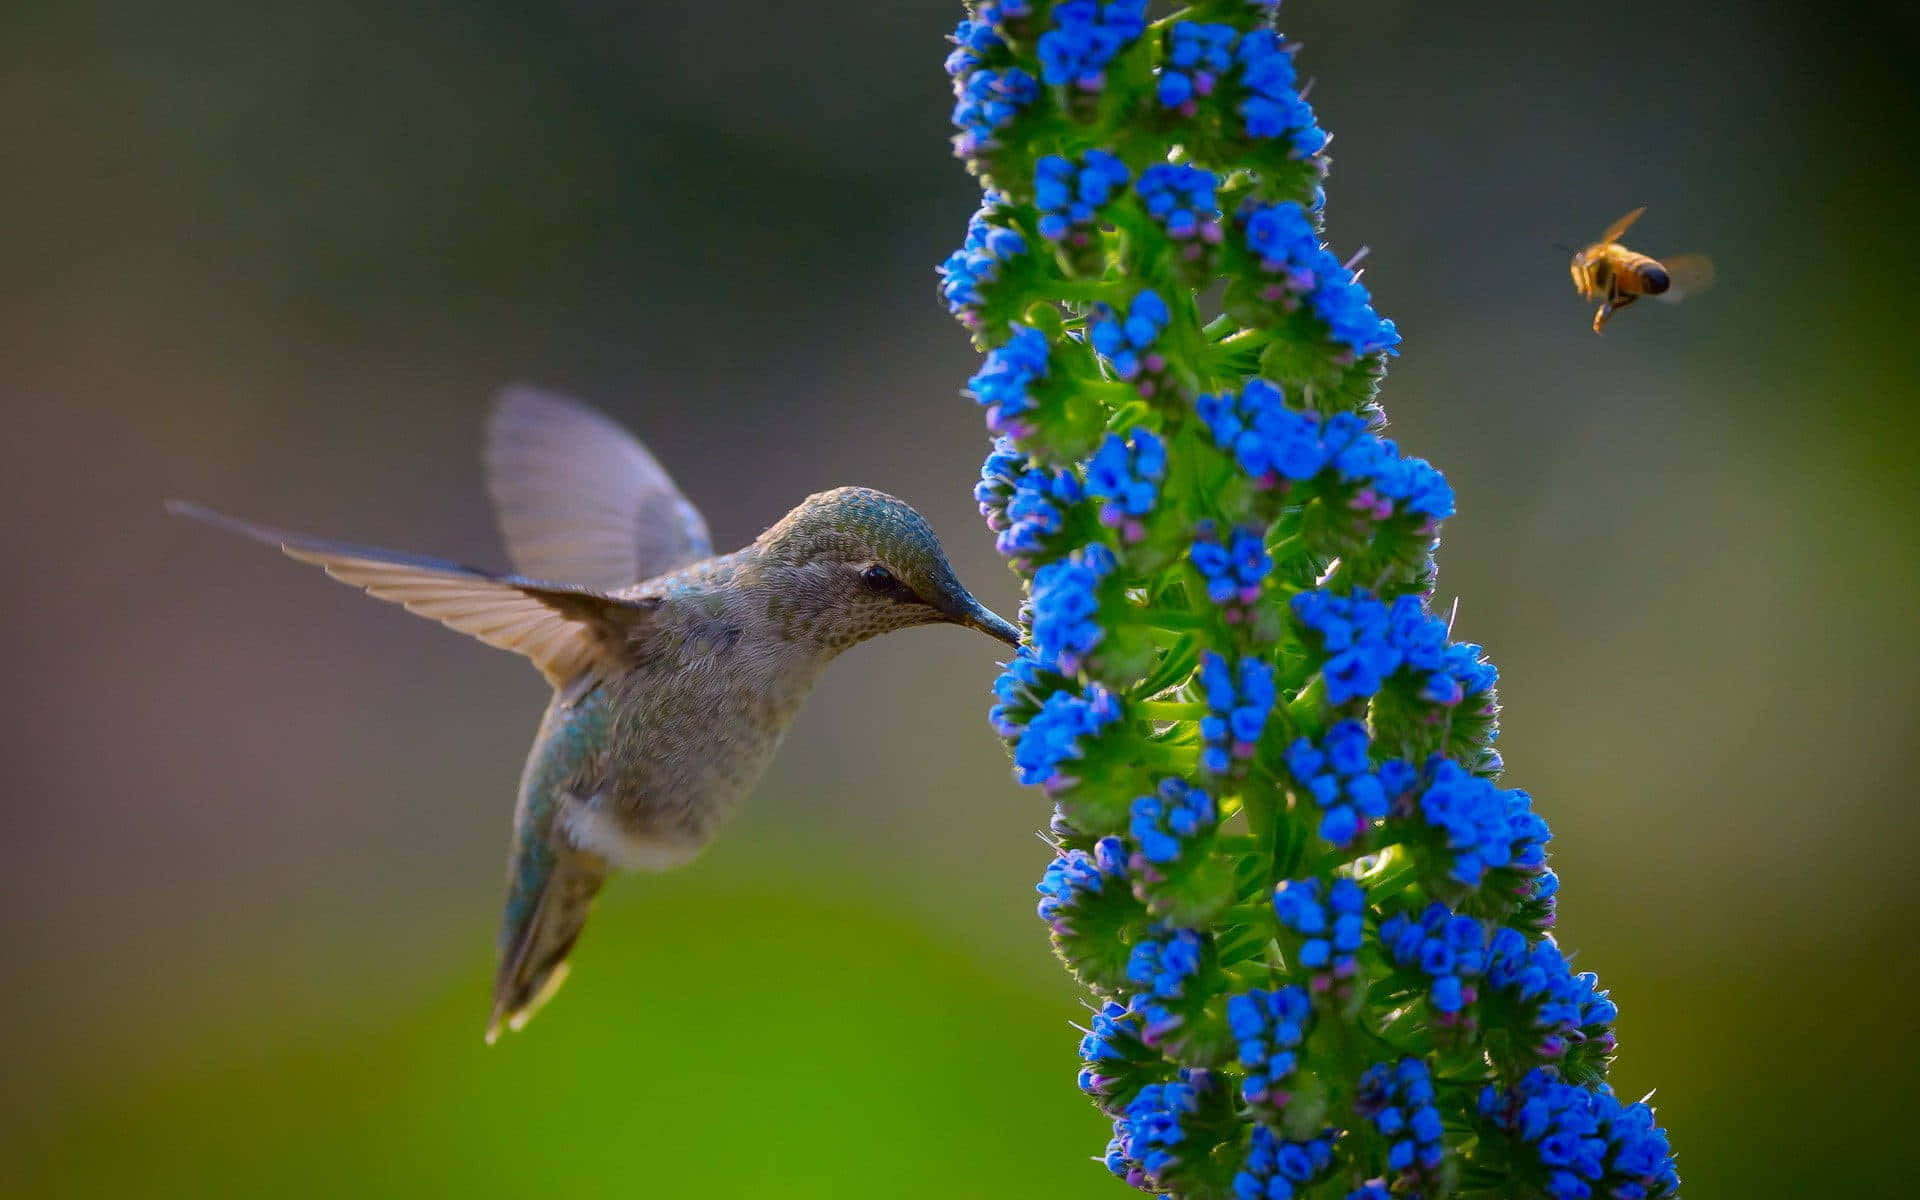 A beautiful hummingbird in the garden